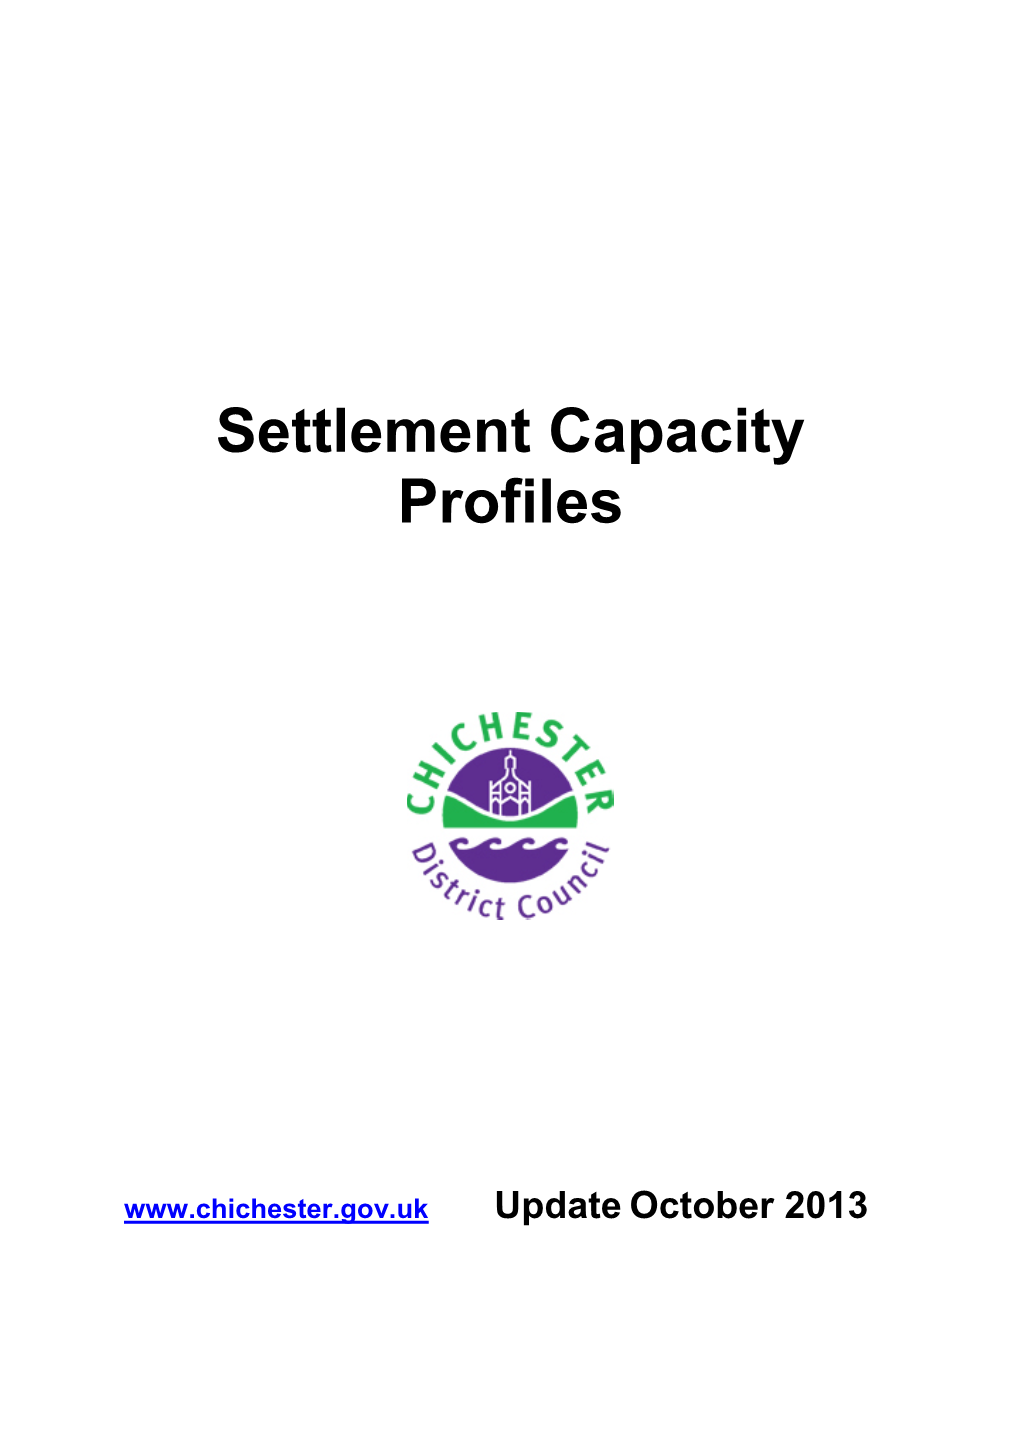 Settlement Capacity Profiles